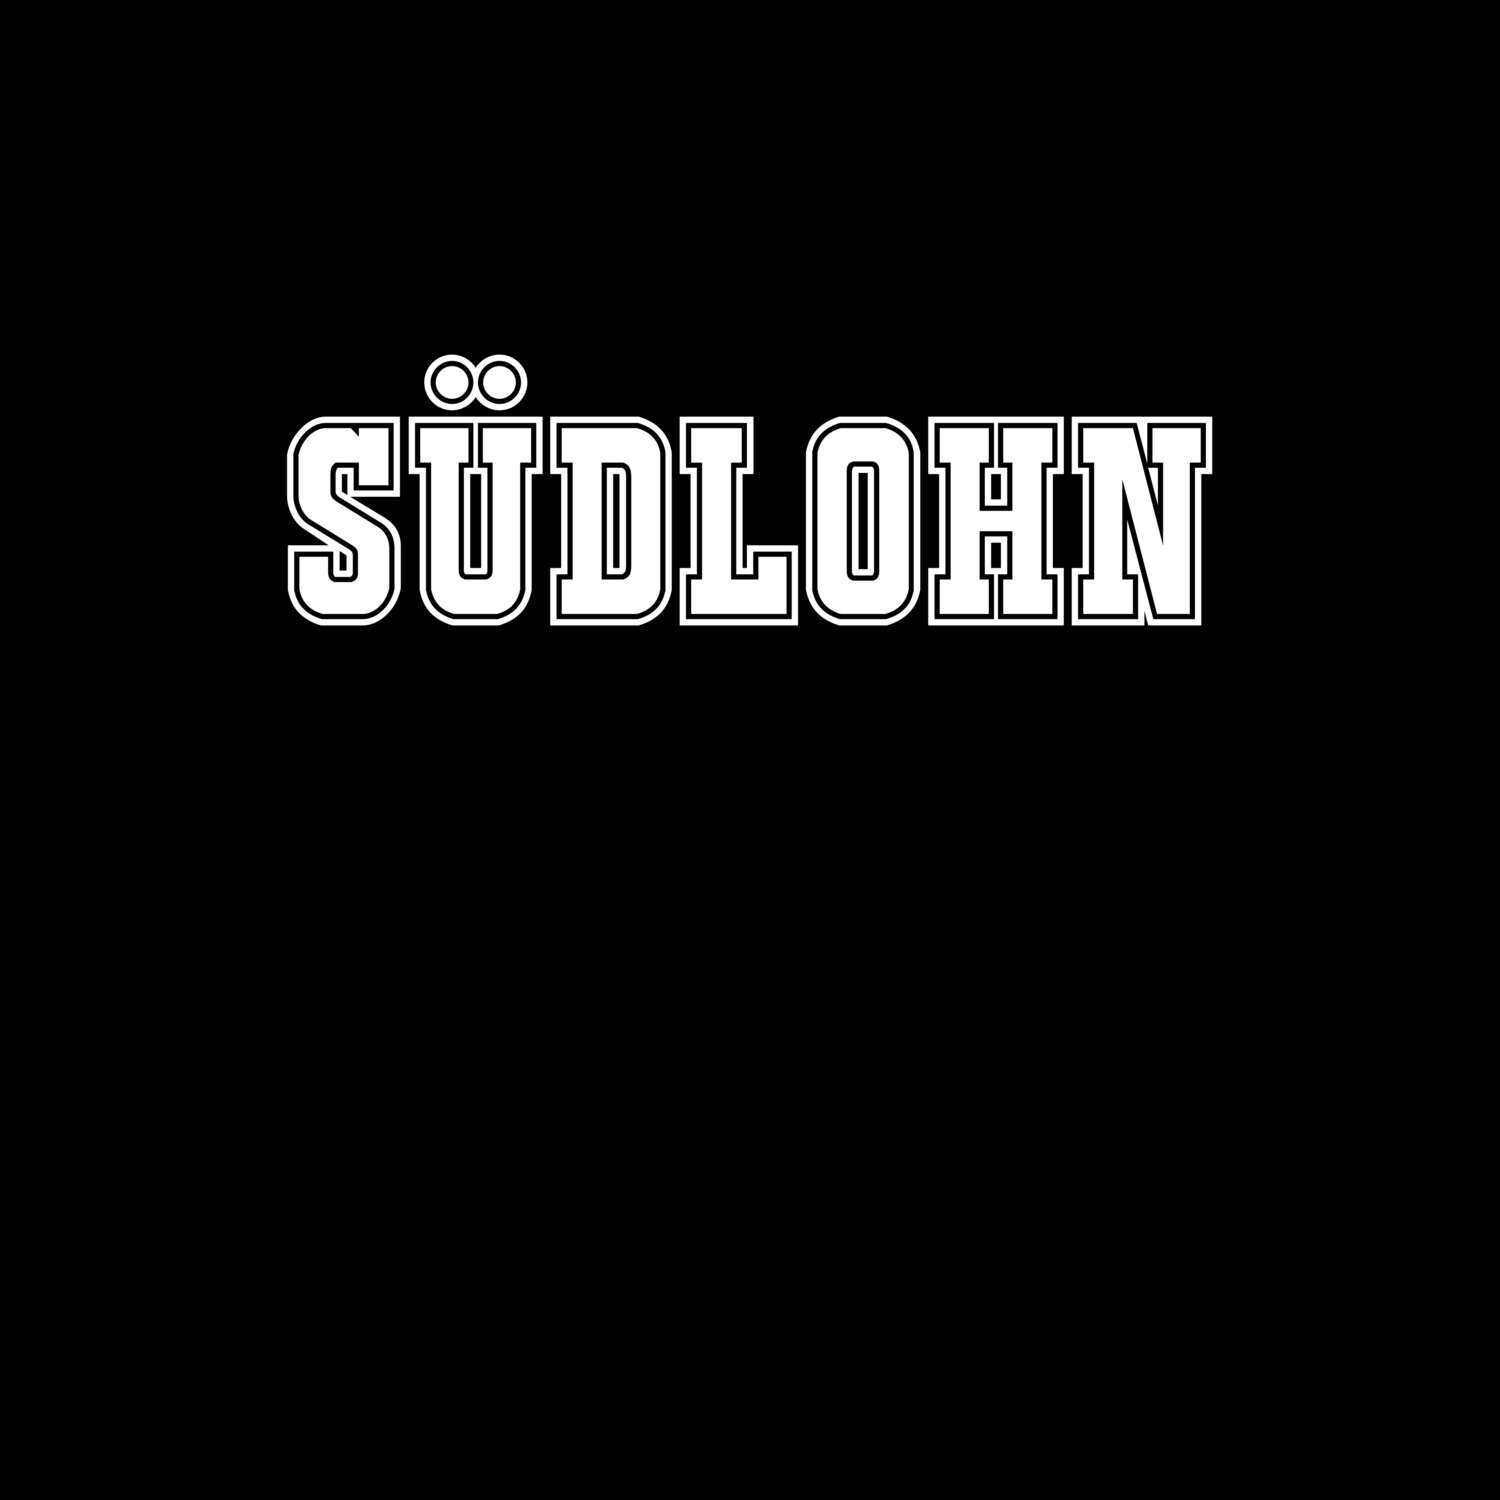 Südlohn T-Shirt »Classic«